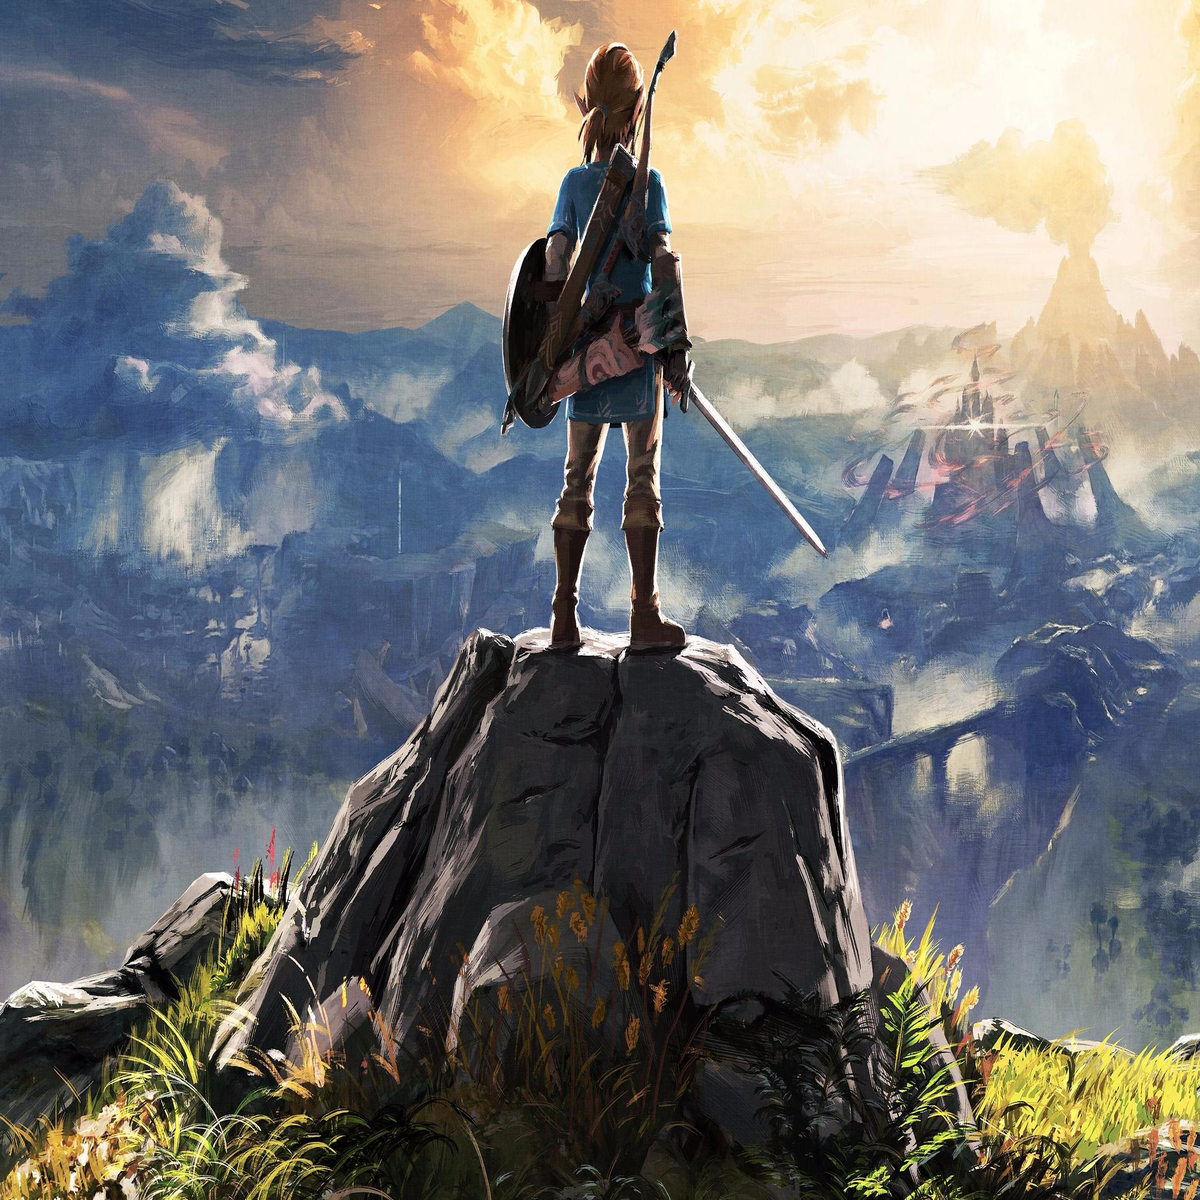 Digital Media Concepts/The Legend Of Zelda: Breath of the Wild - Wikiversity